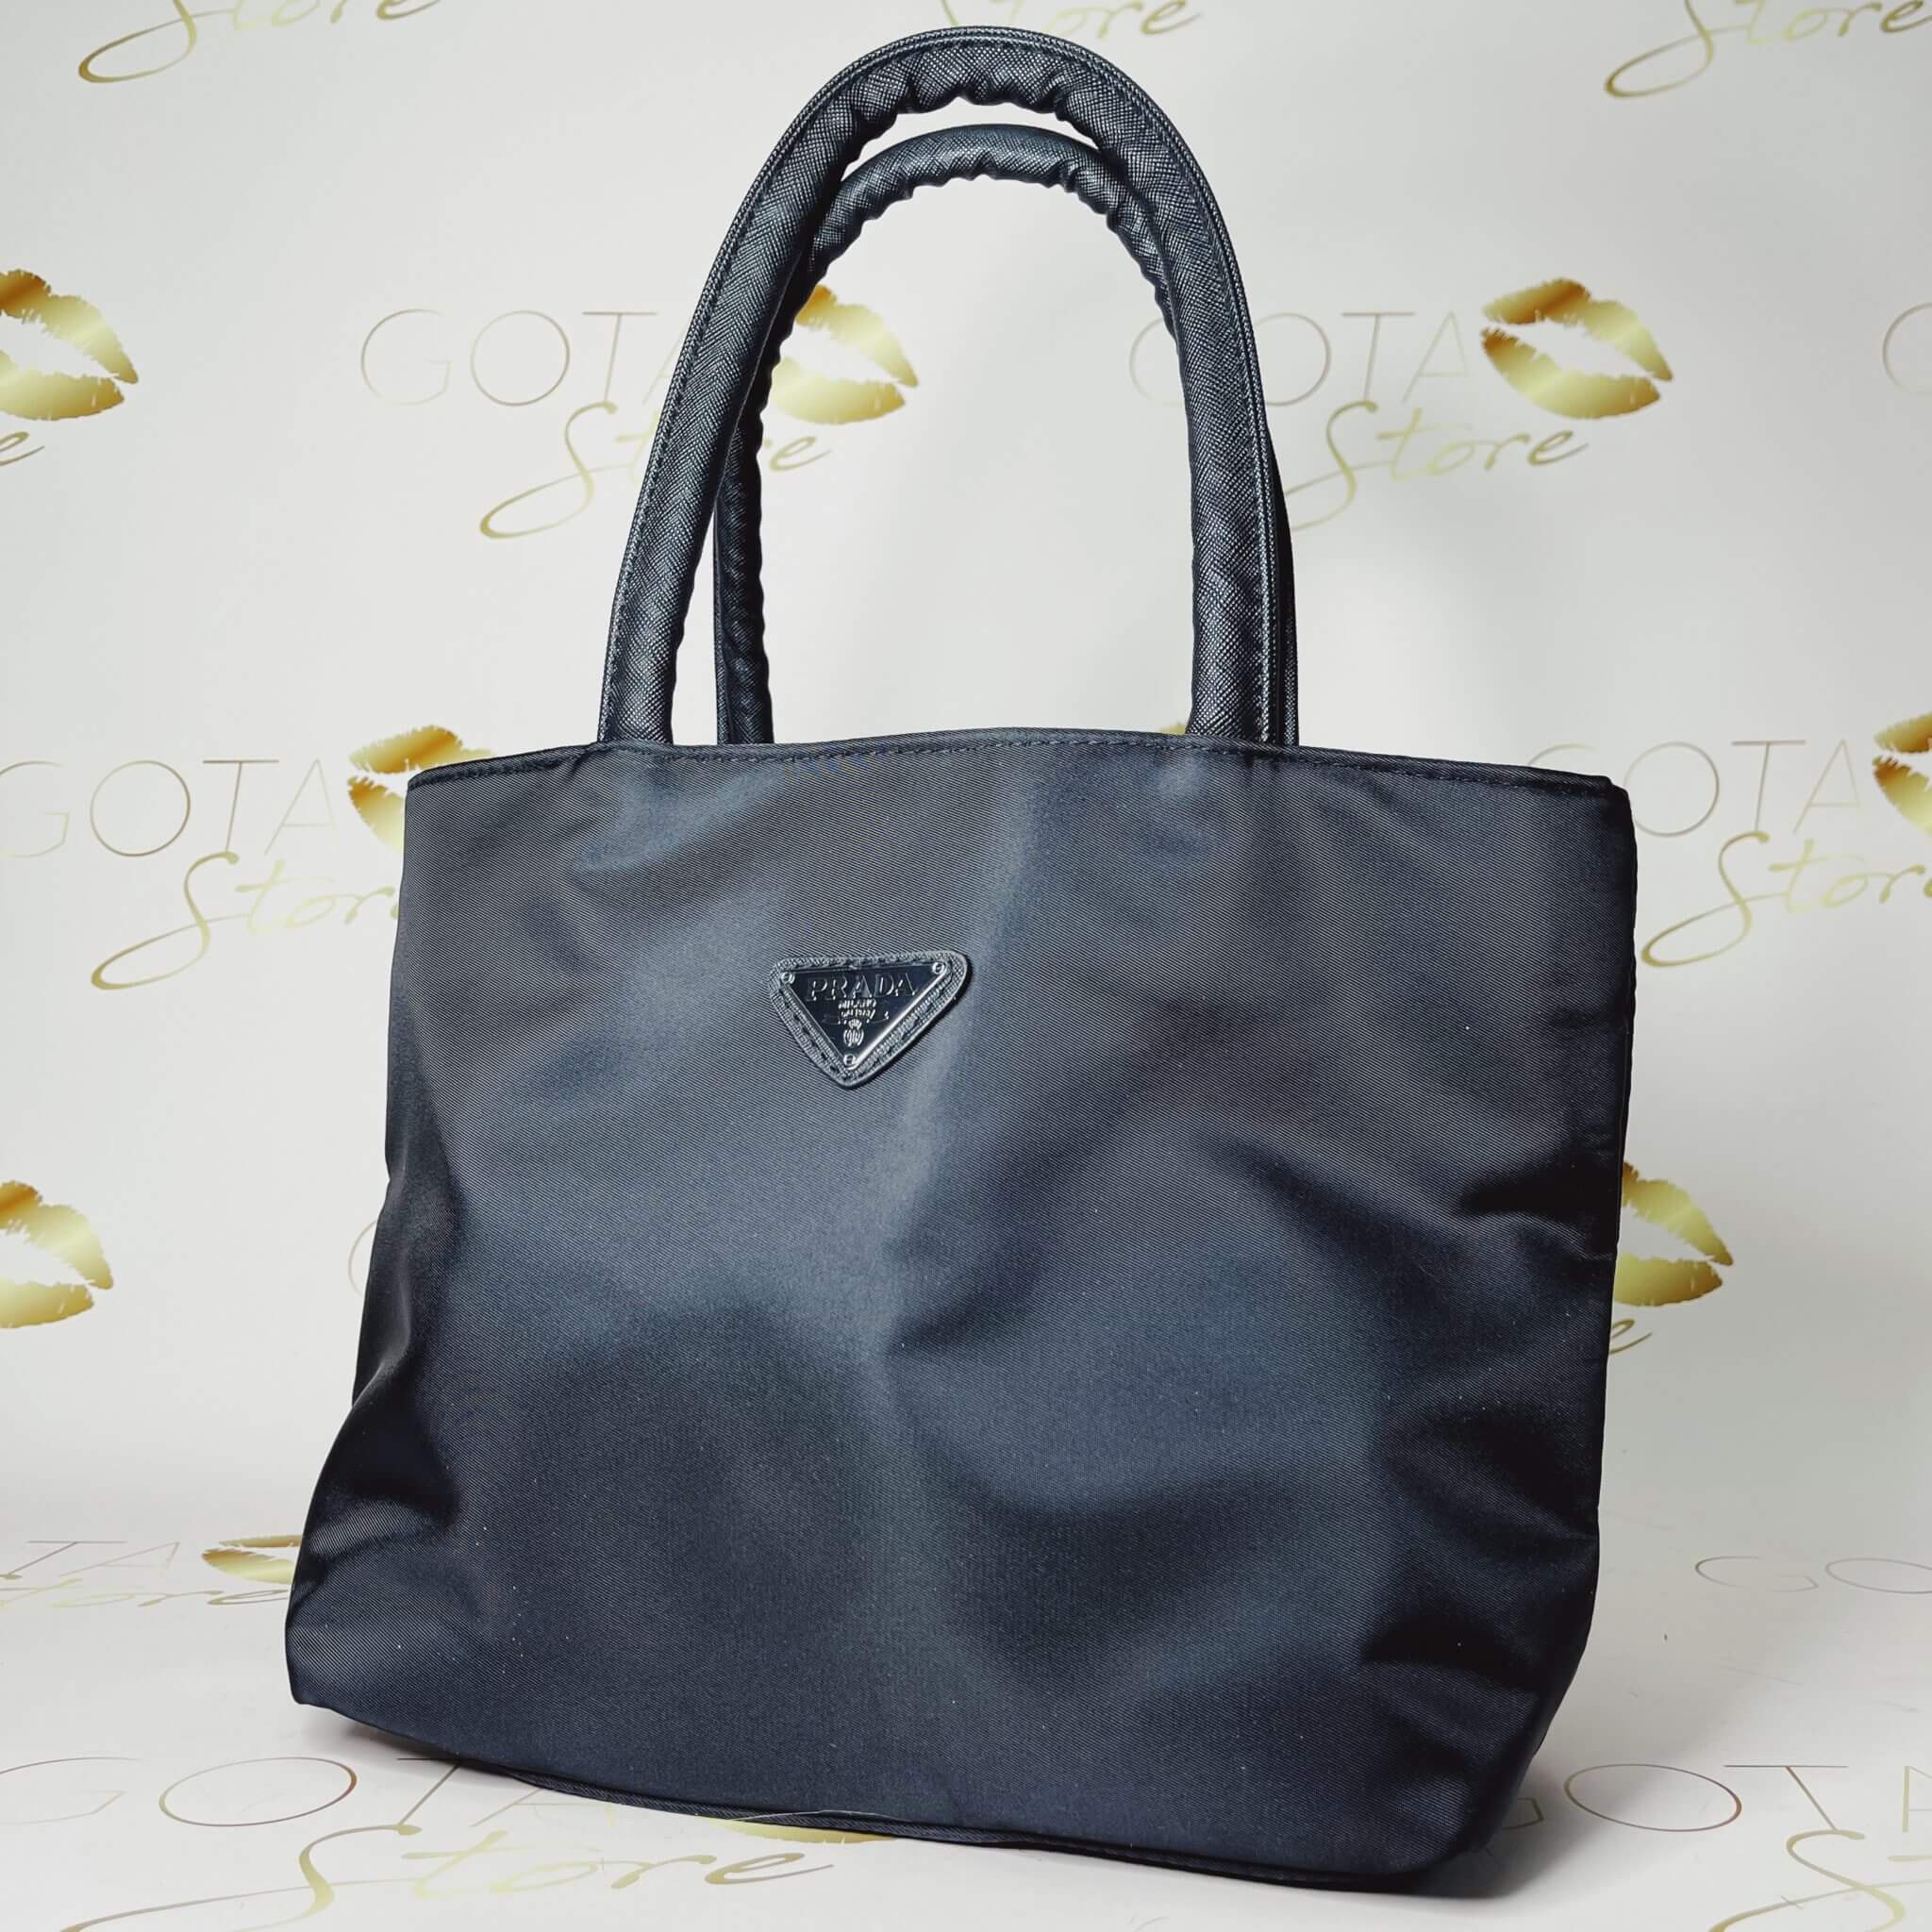 Prda Black Nylon Medium Purse - Fabric Women's Medium Tote Bag - GOTA Store